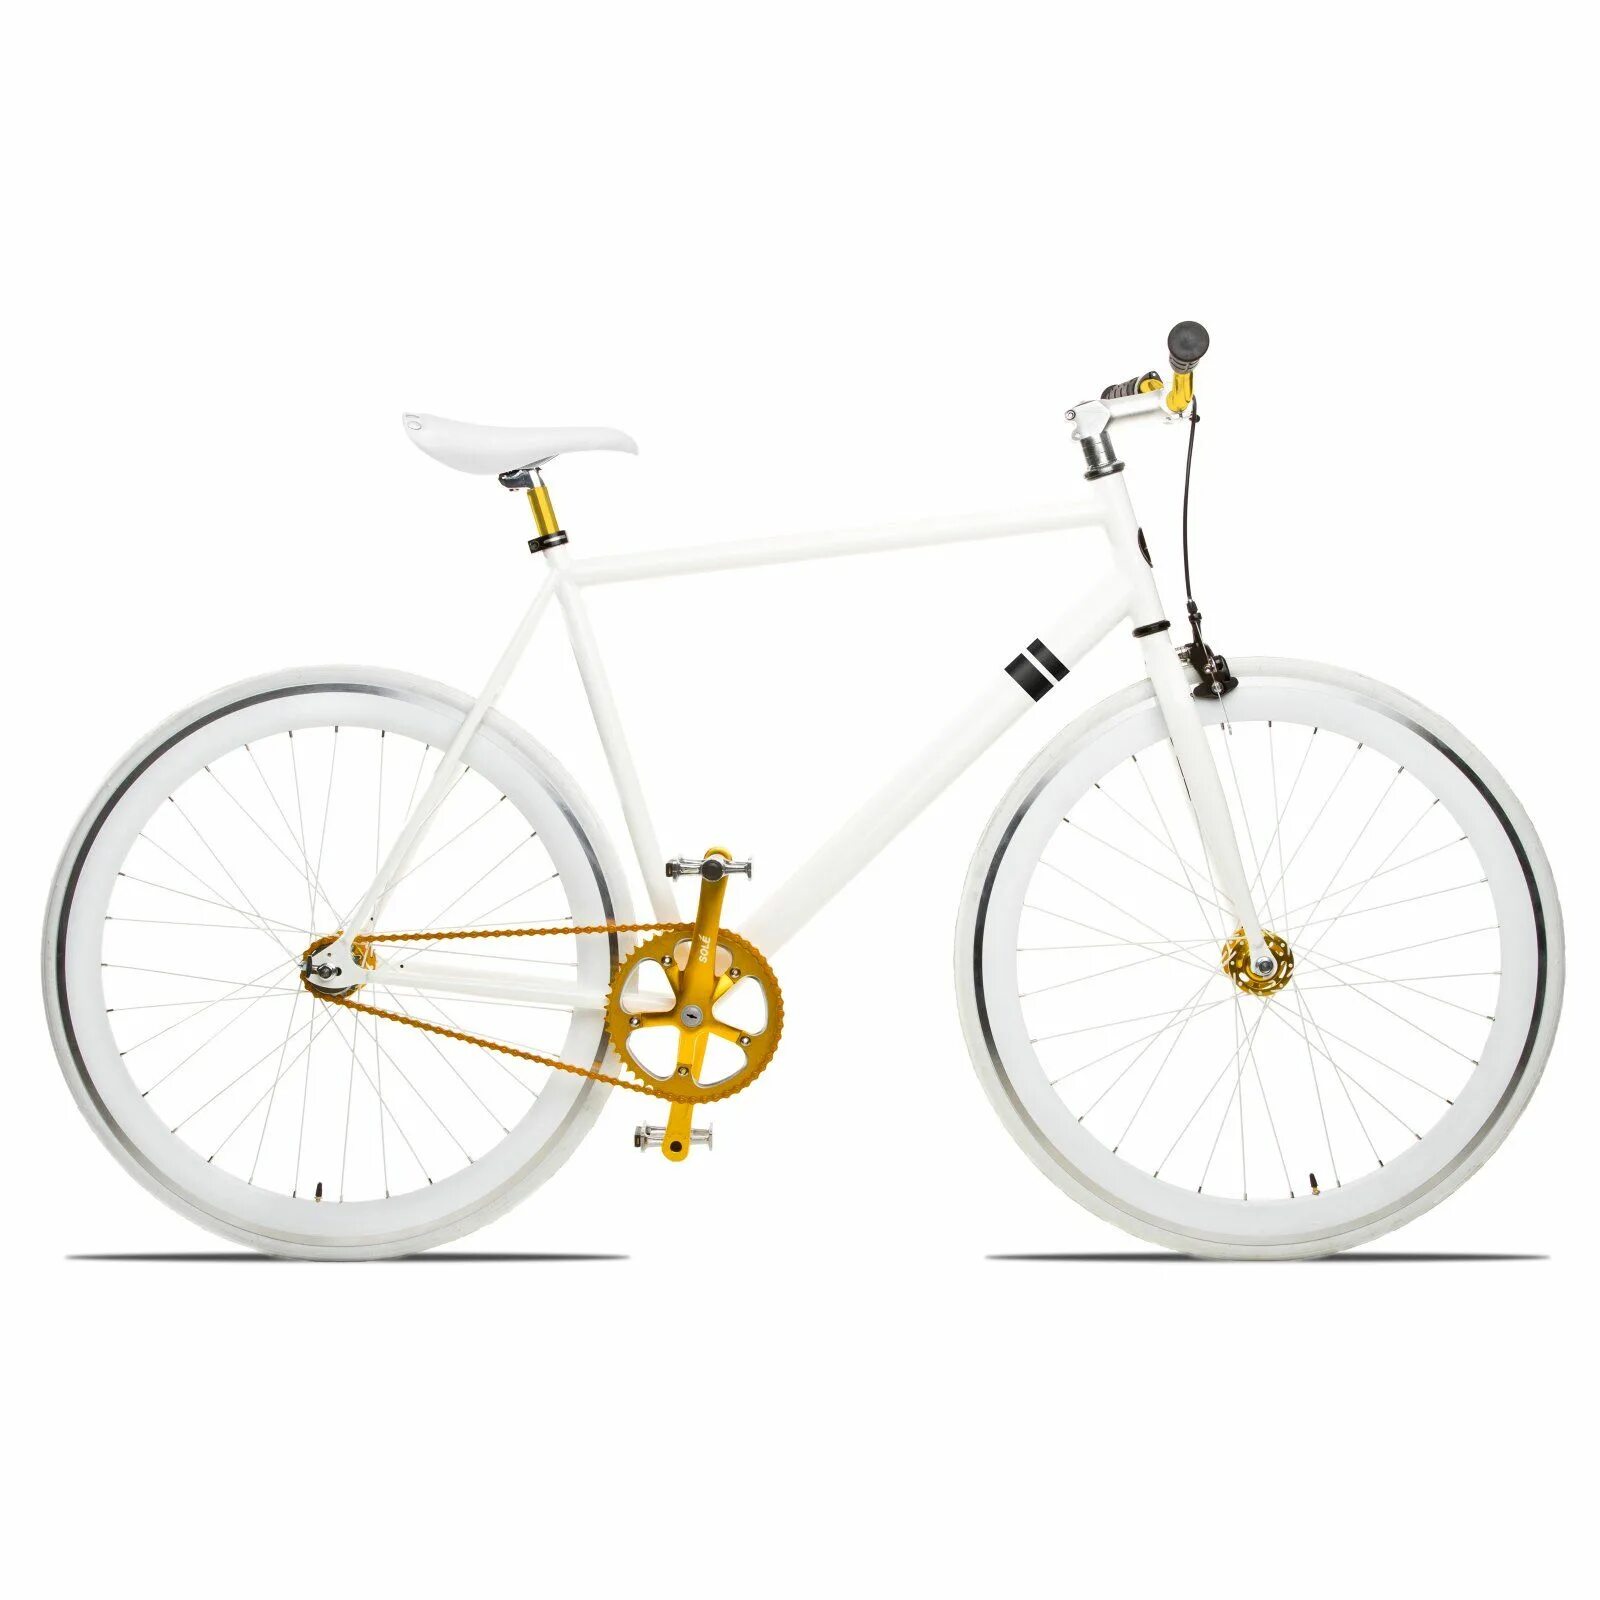 White bikes. Бело золотой велосипед. Велосипед золотого цвета. Велосипед серо золотой. Женский велосипед кастом.